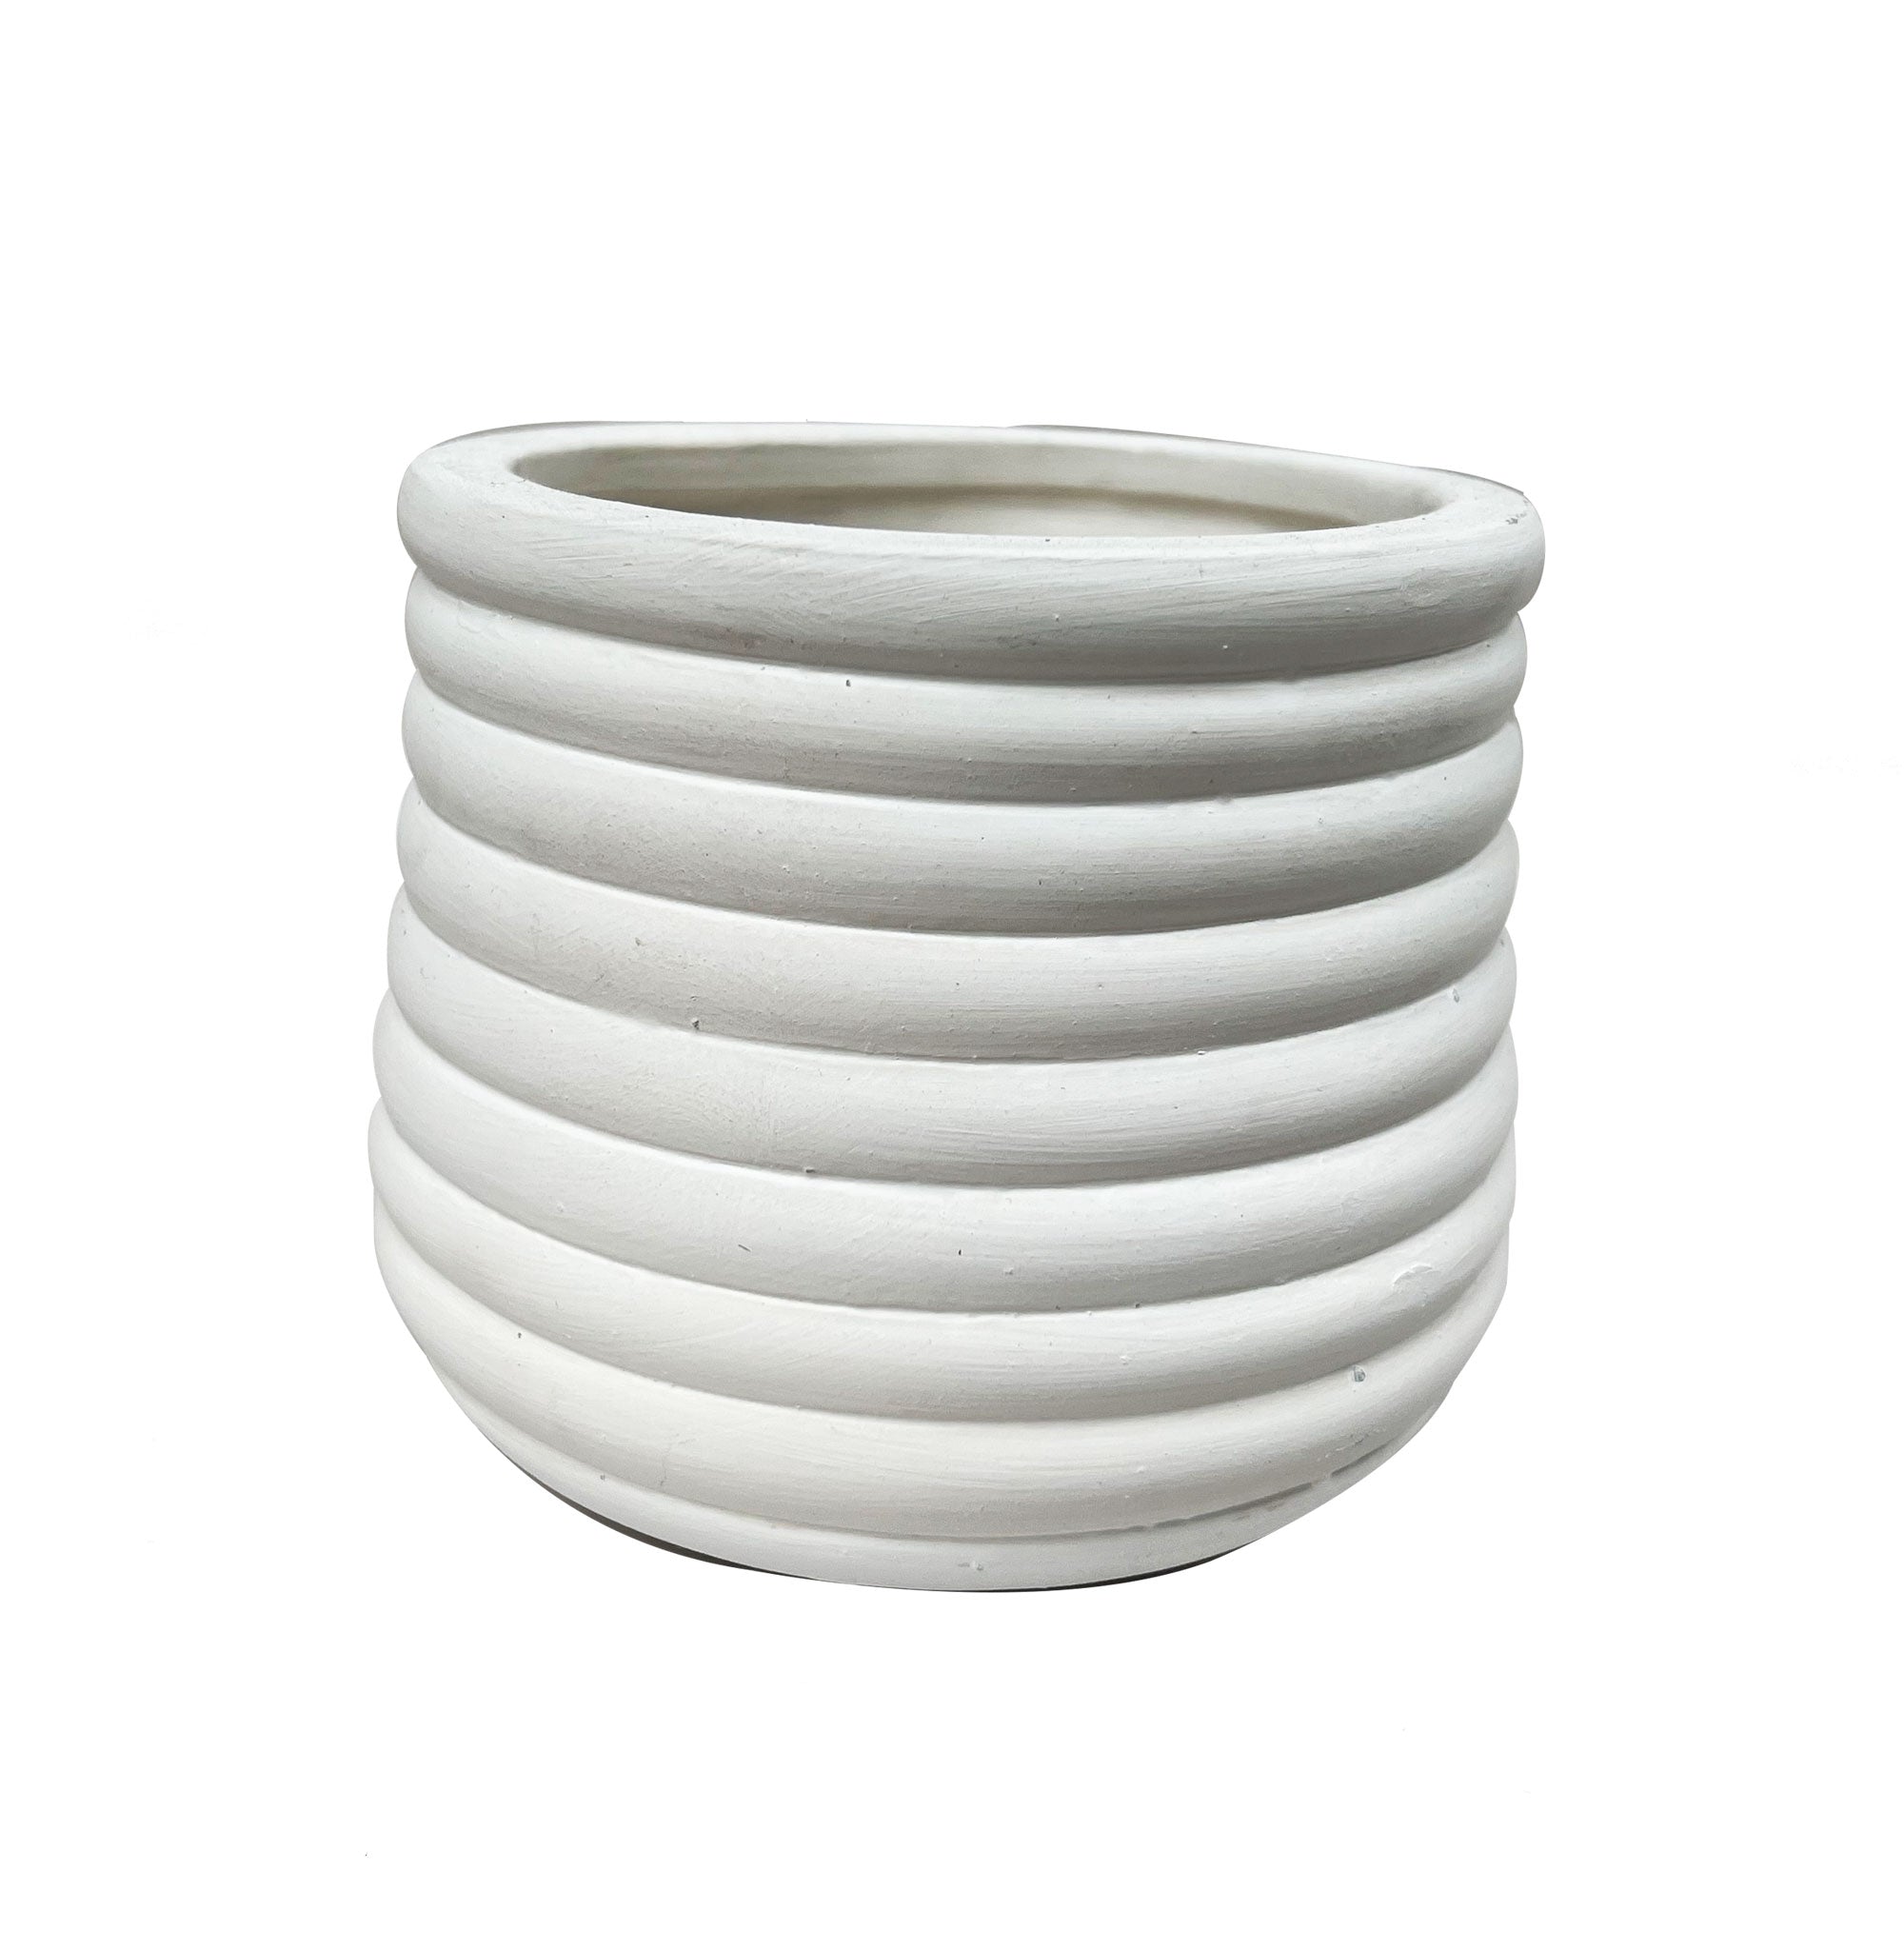 Matera de ceramica blanca